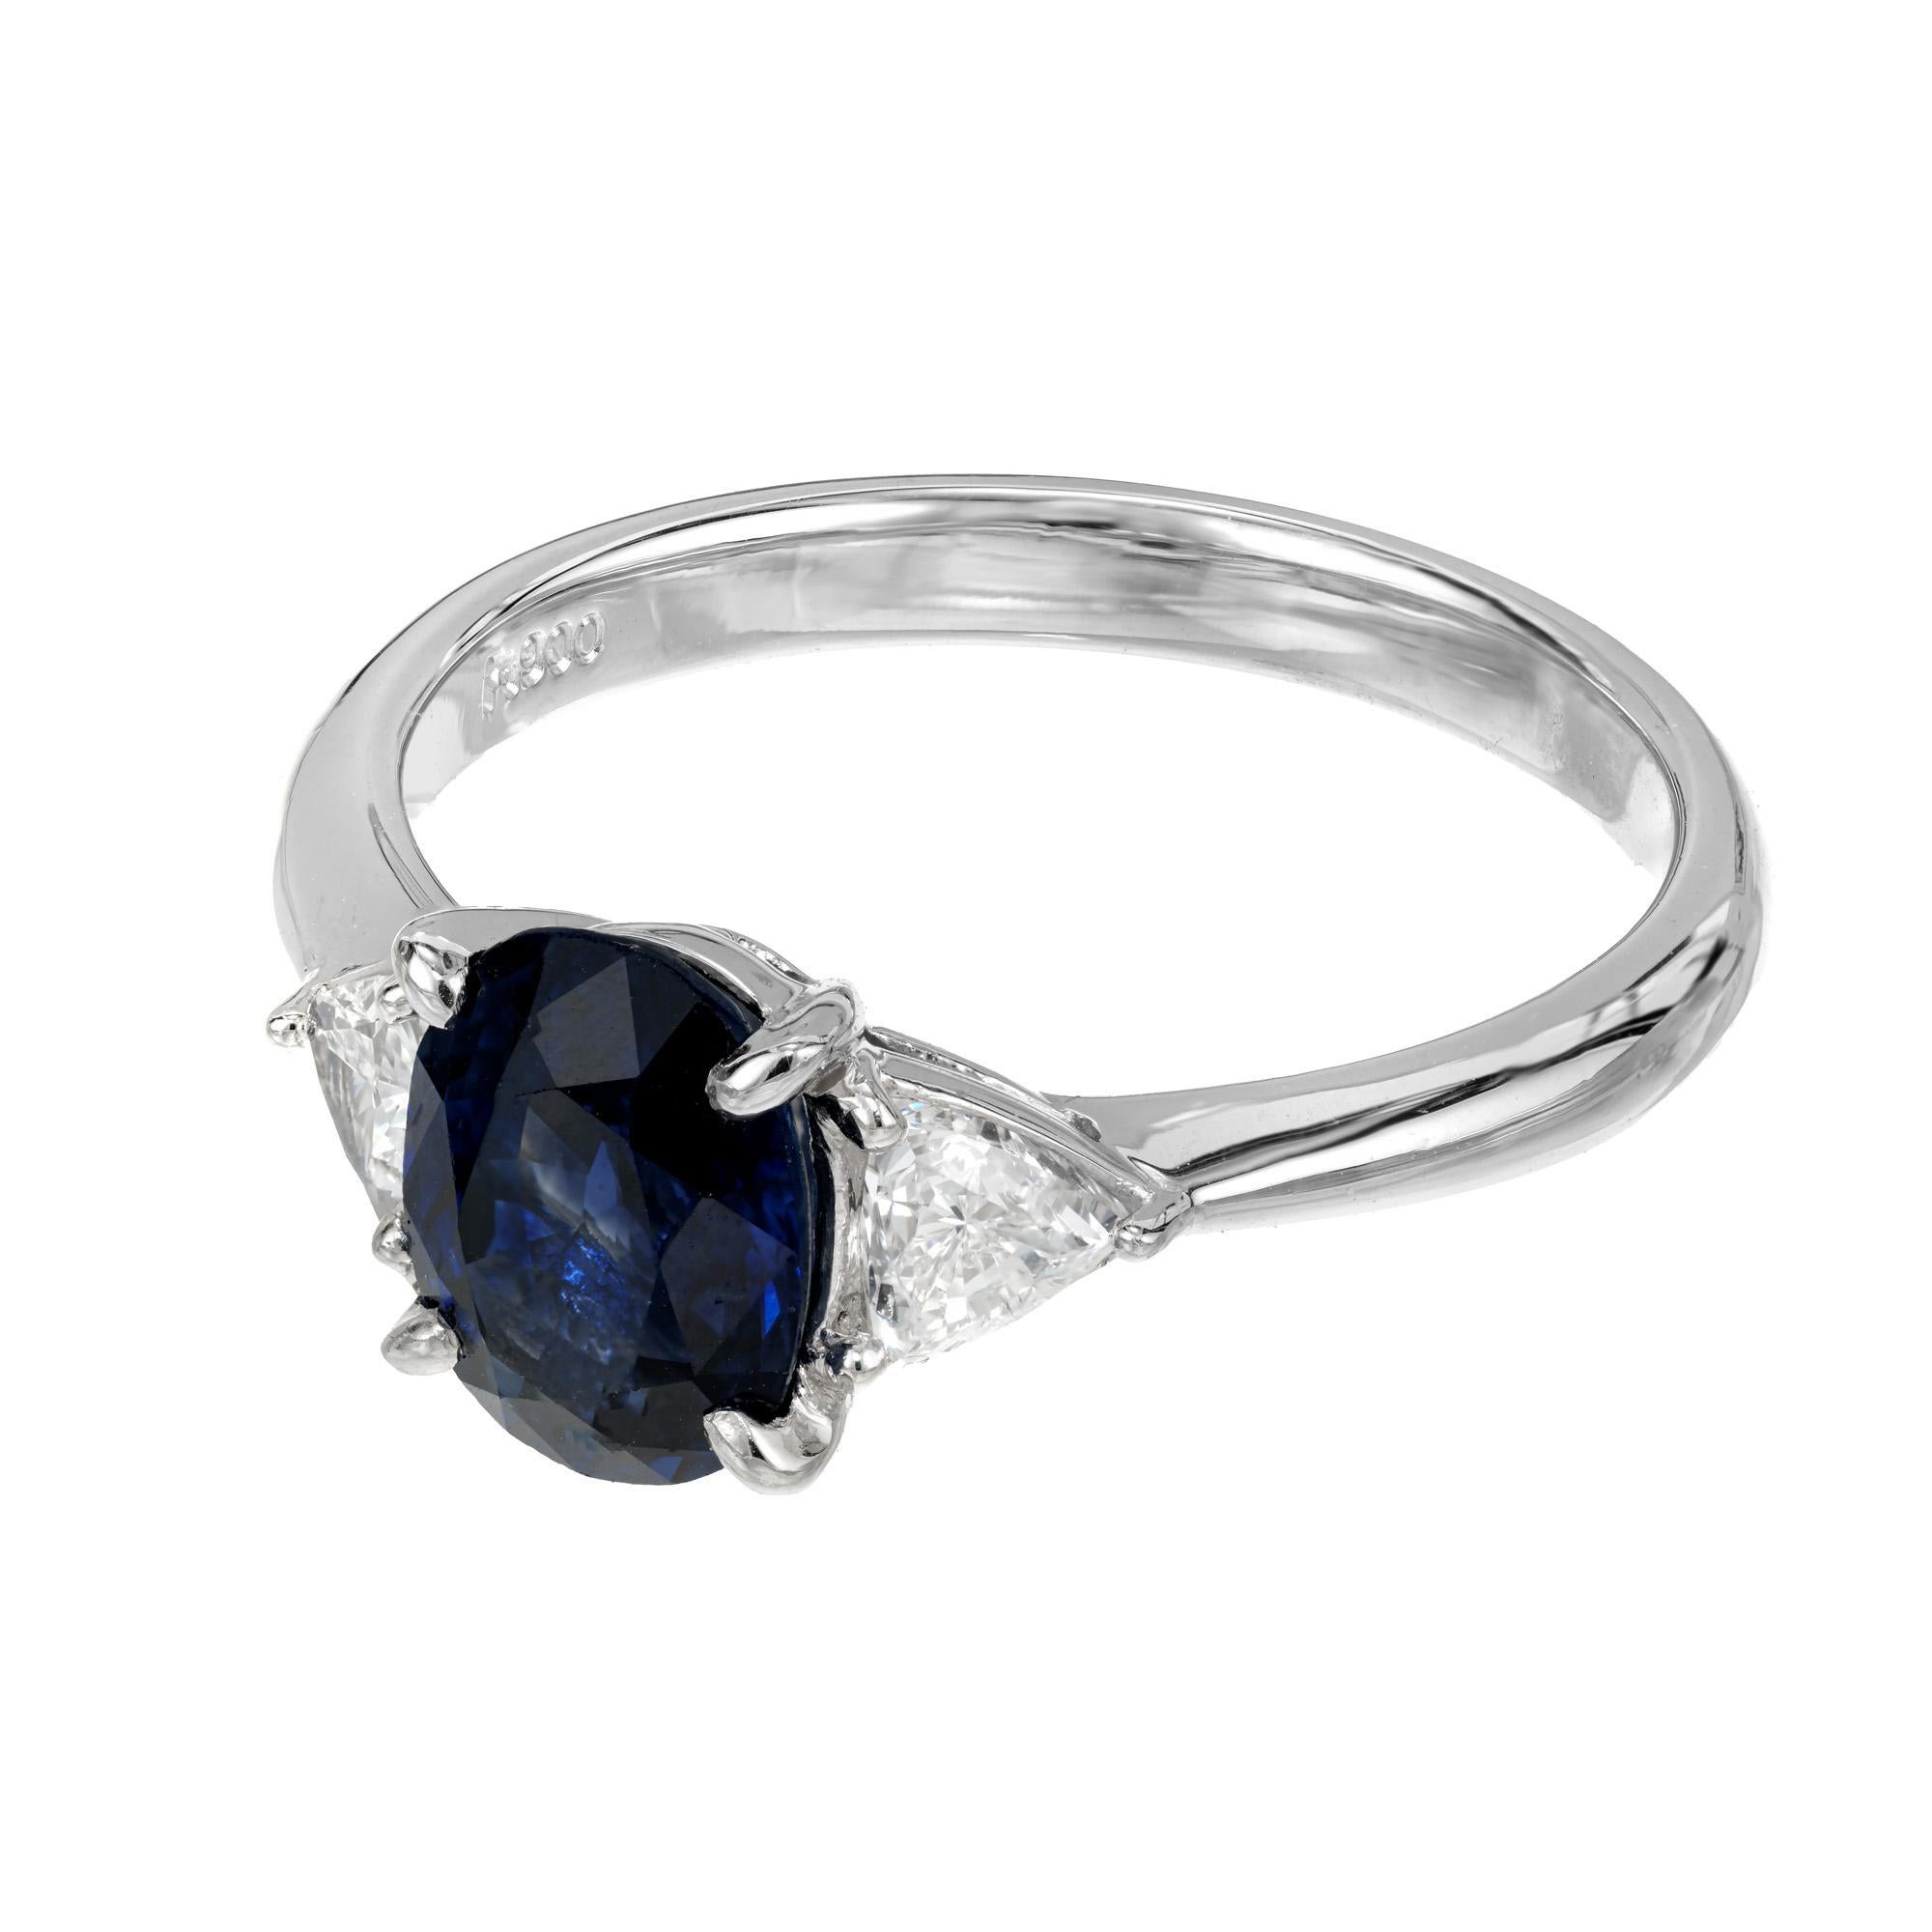 2 carat blue sapphire ring